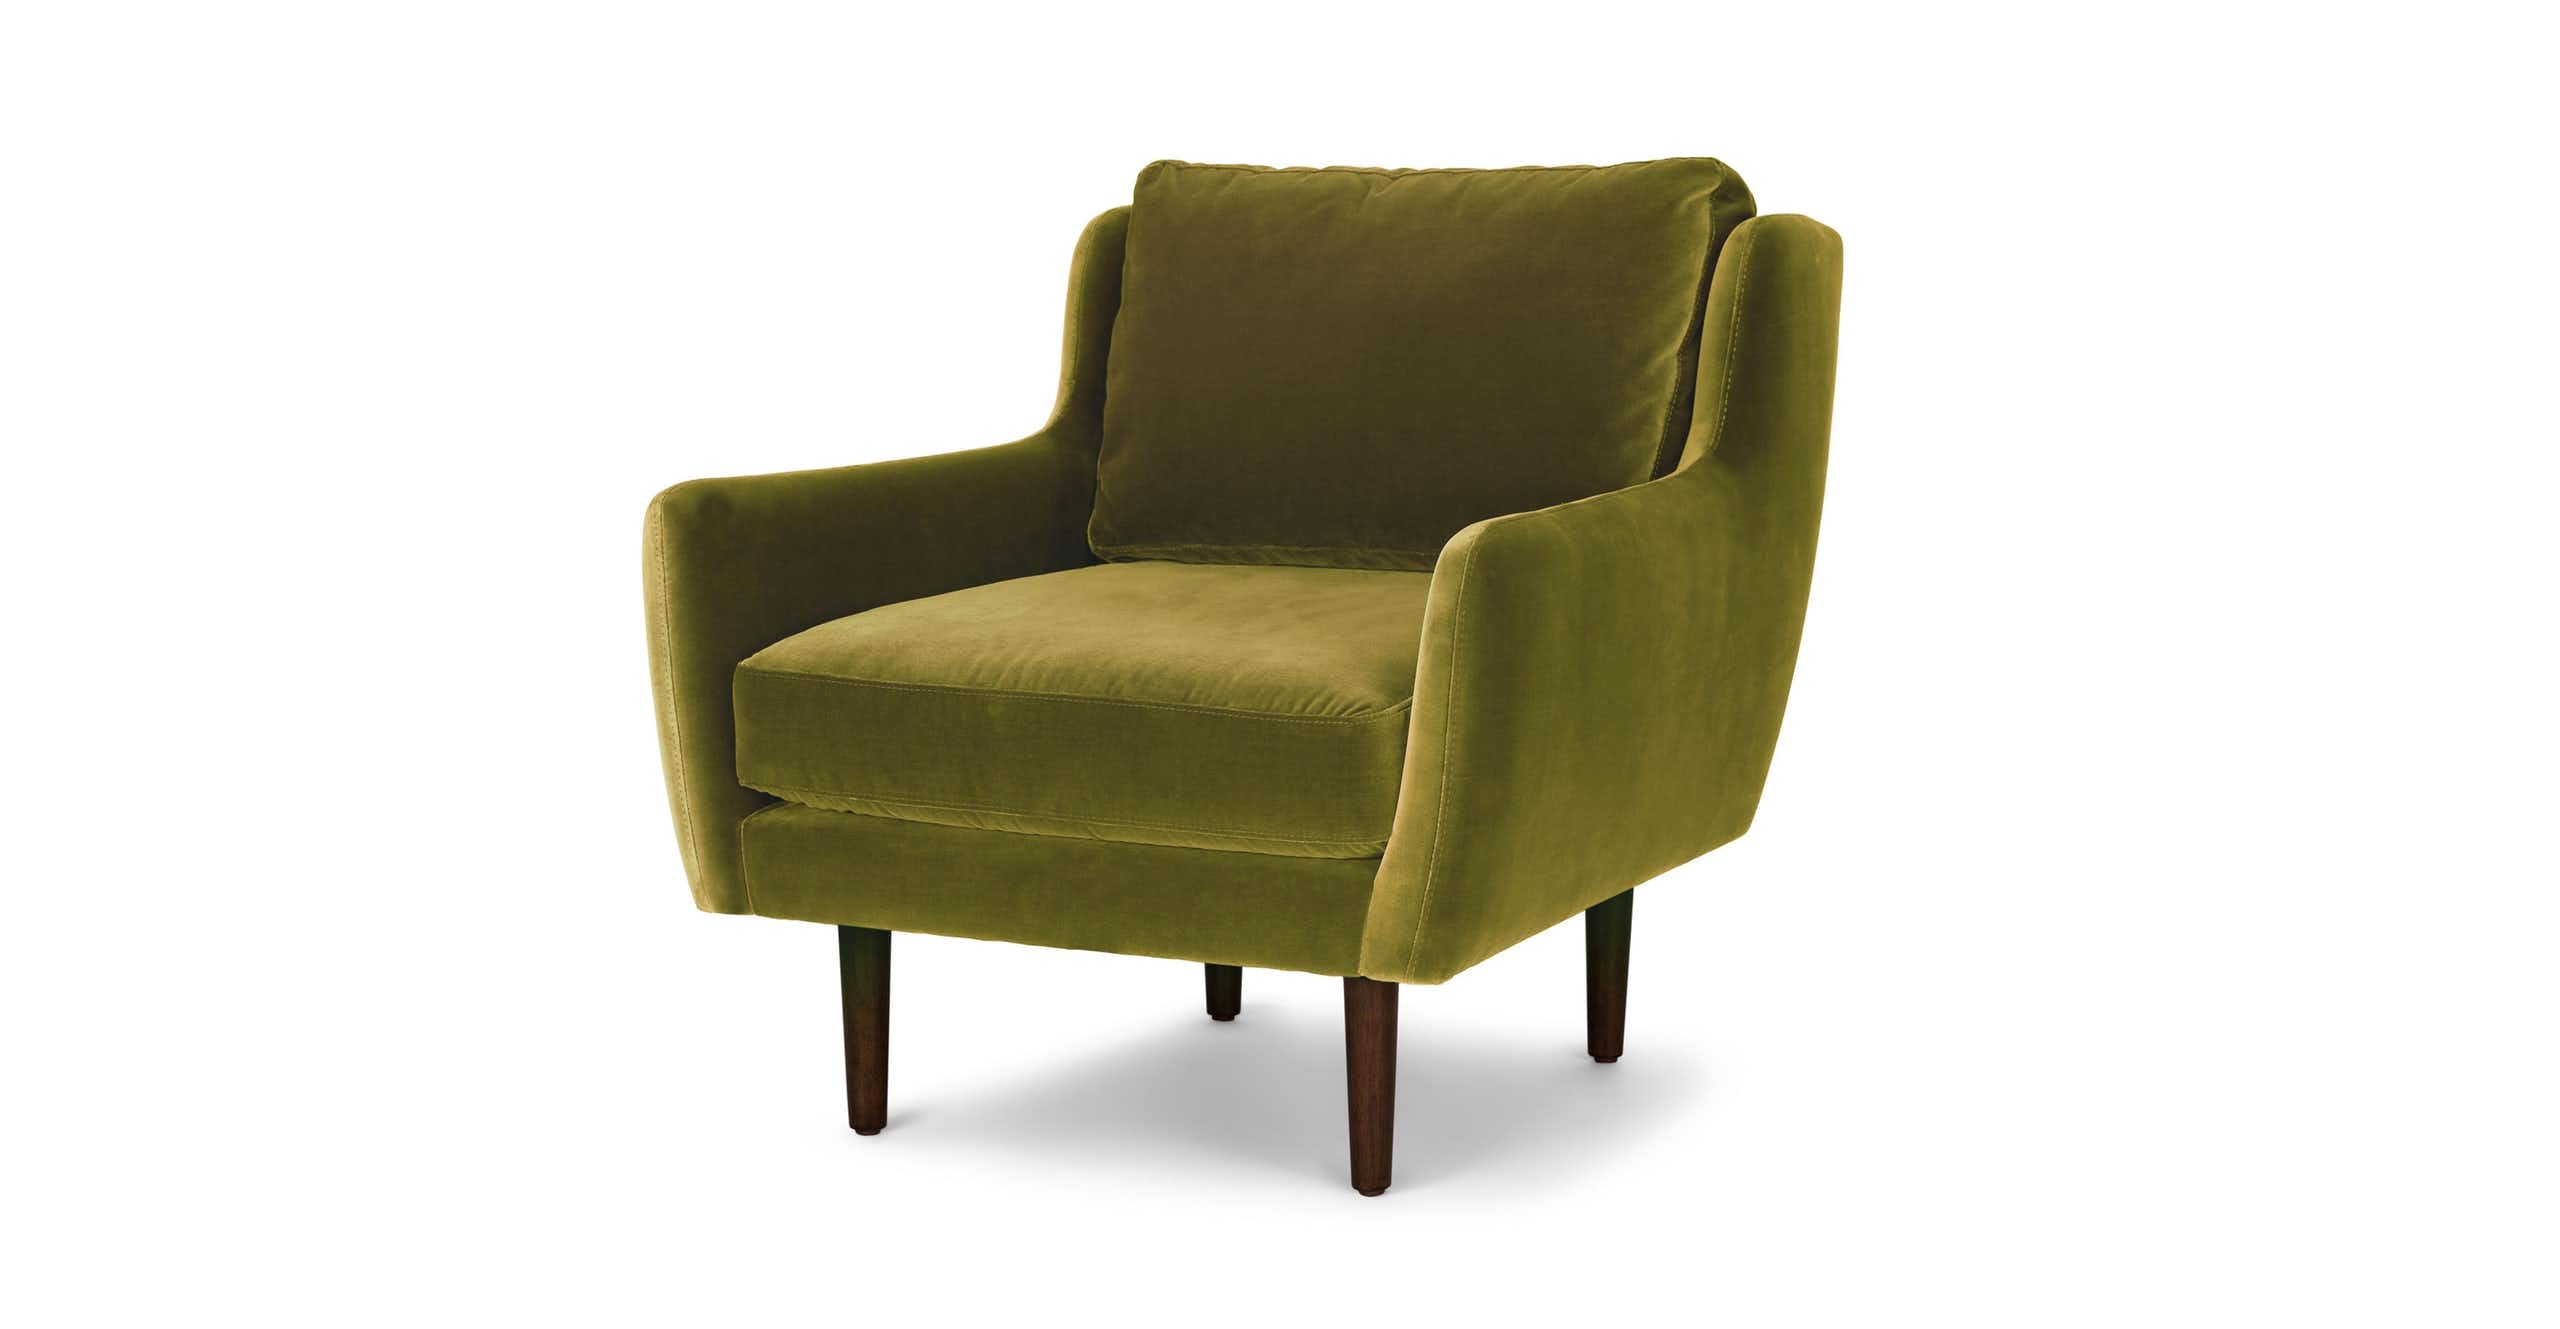 Matrix Olive Green Chair - Image 1